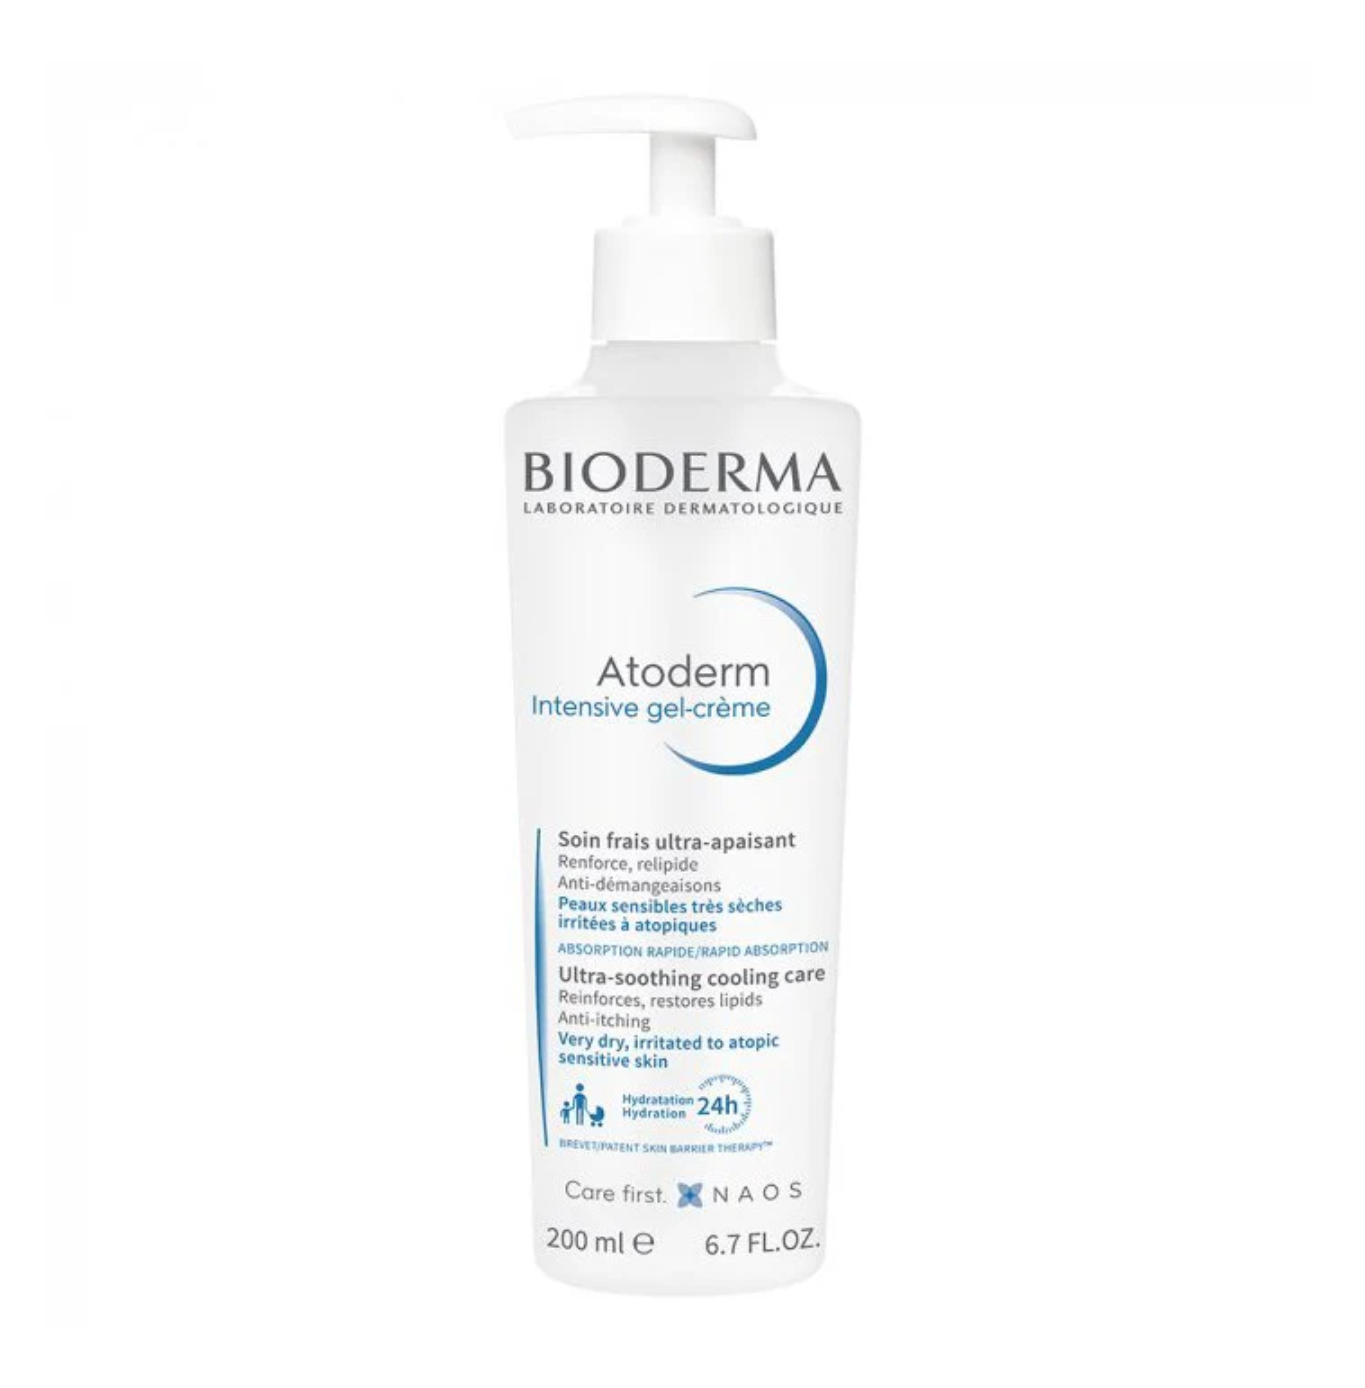 Bioderma Atoderm intensive gel cream 乾燥護理系列 強效滋潤修護啫喱 200ml